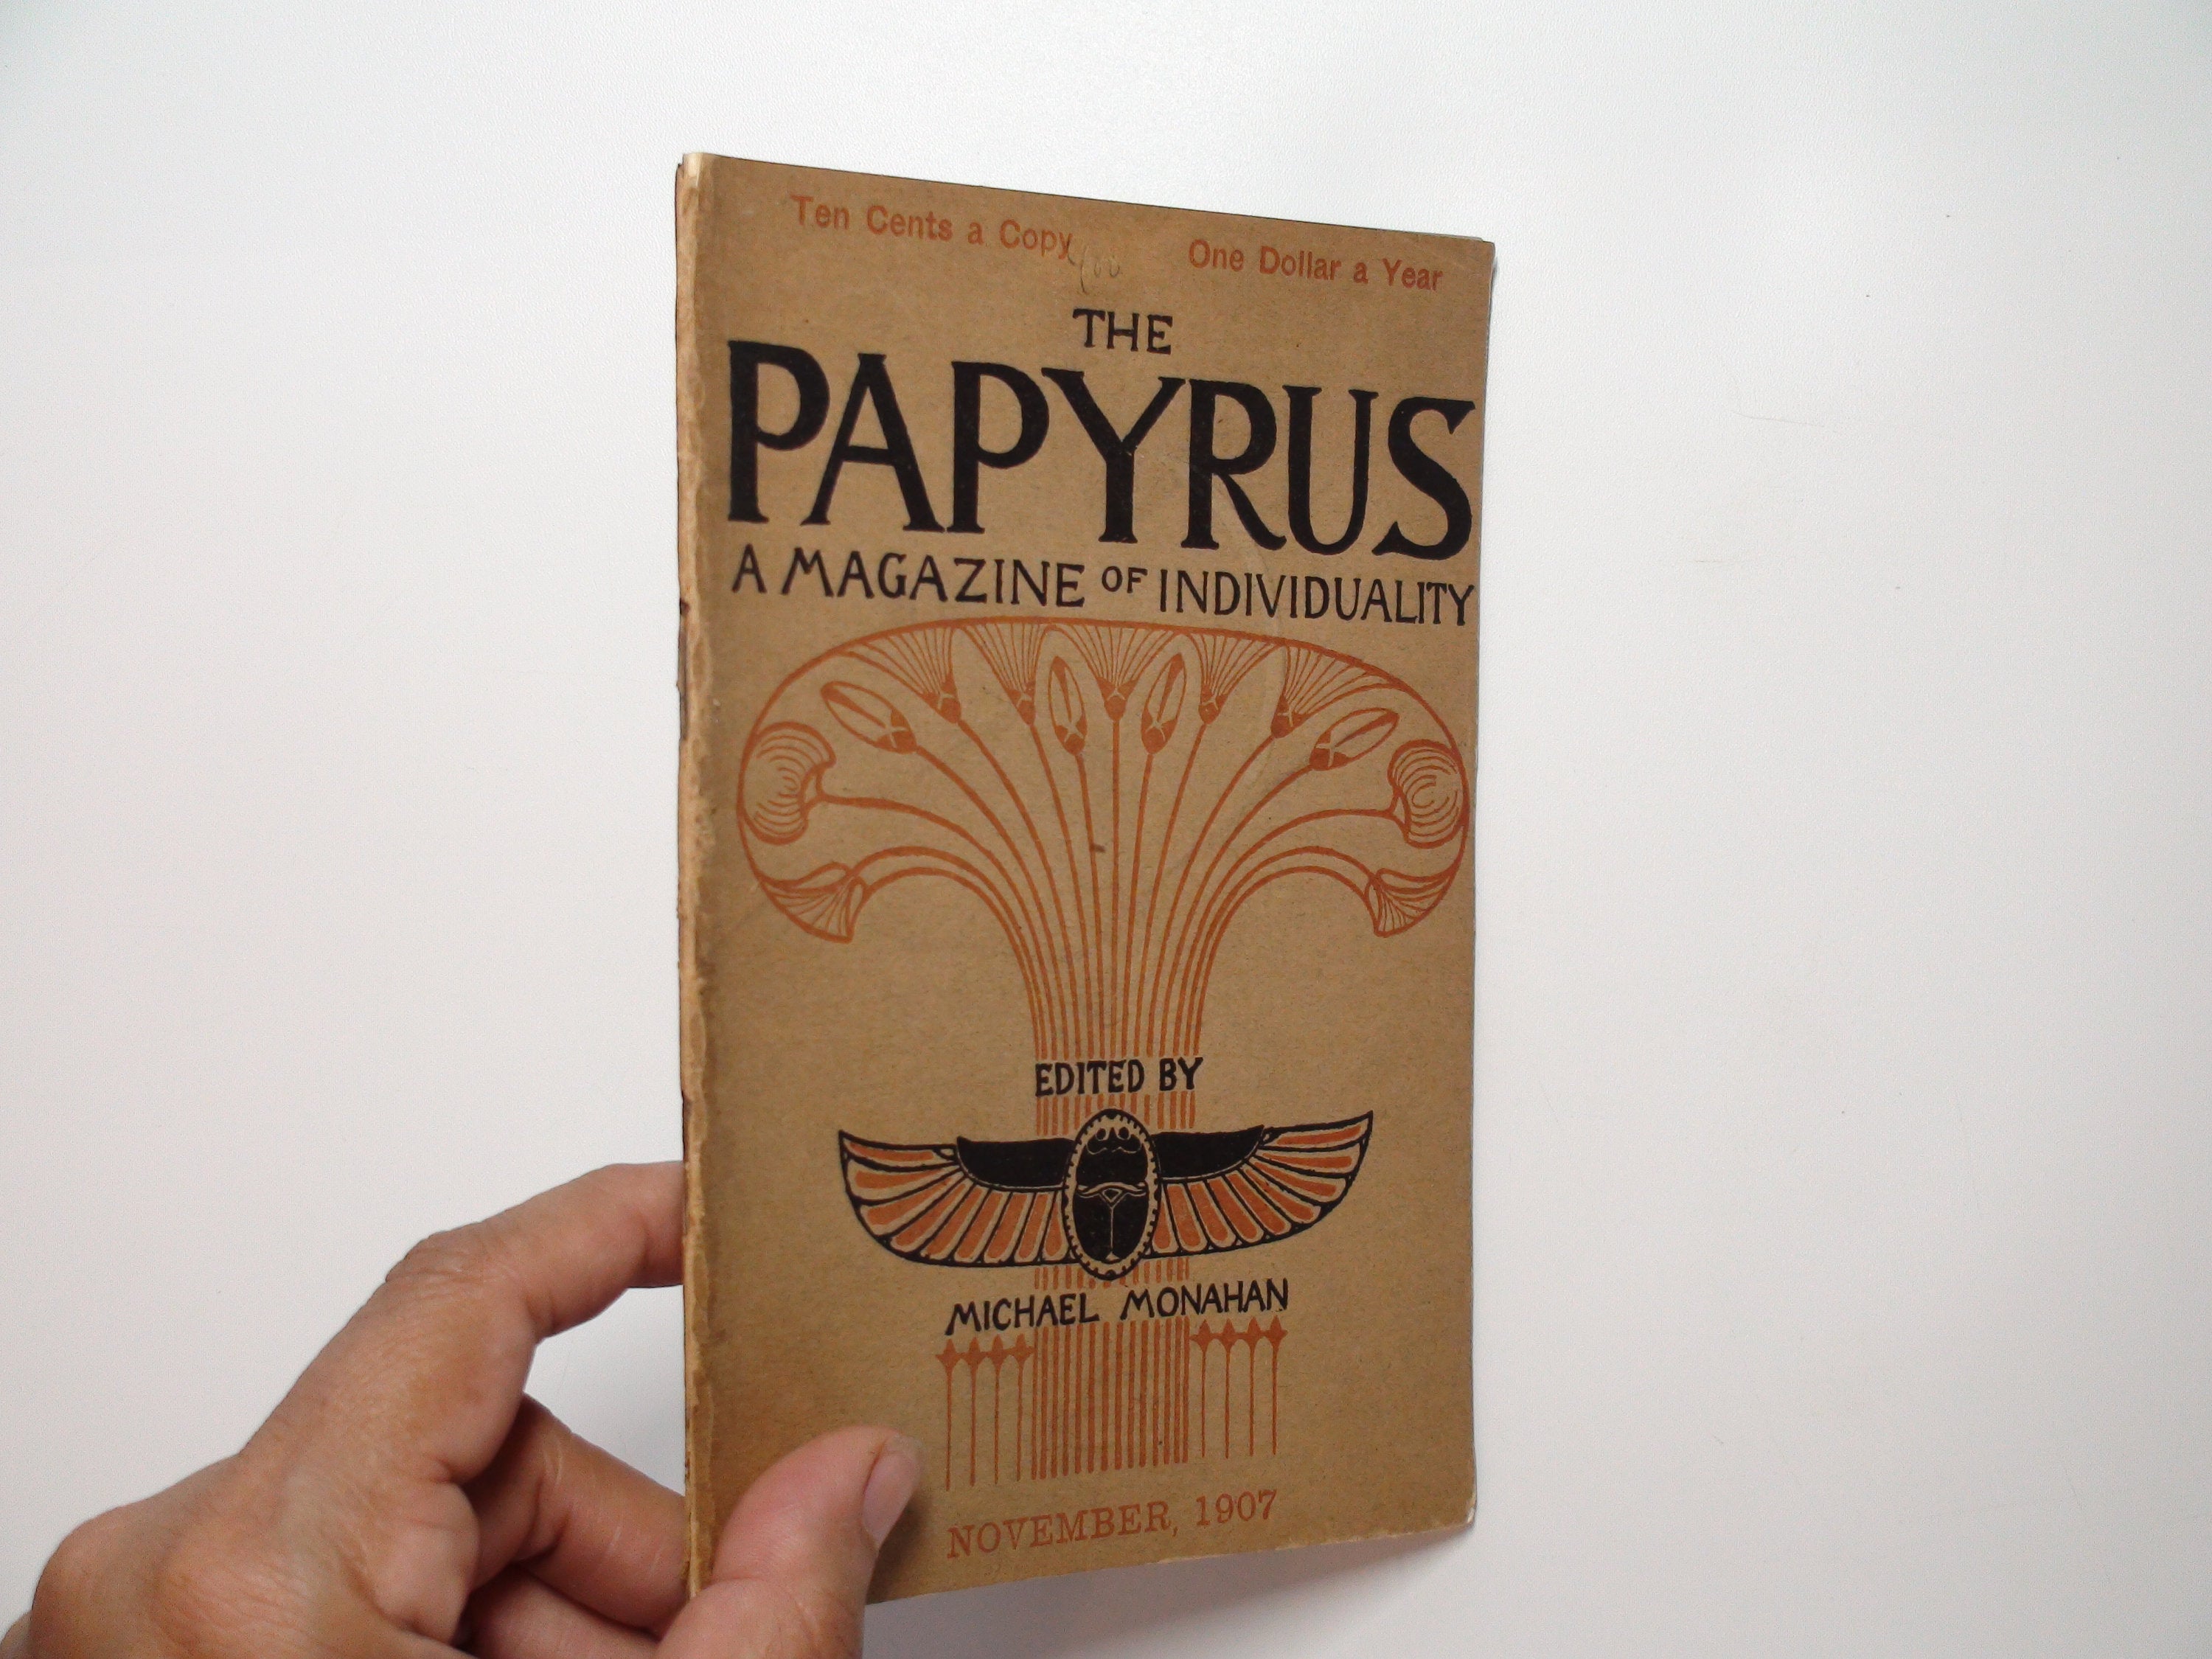 The Papyrus Magazine, Ed. by Michael Monahan, RARE, 1st Ed, November 1907